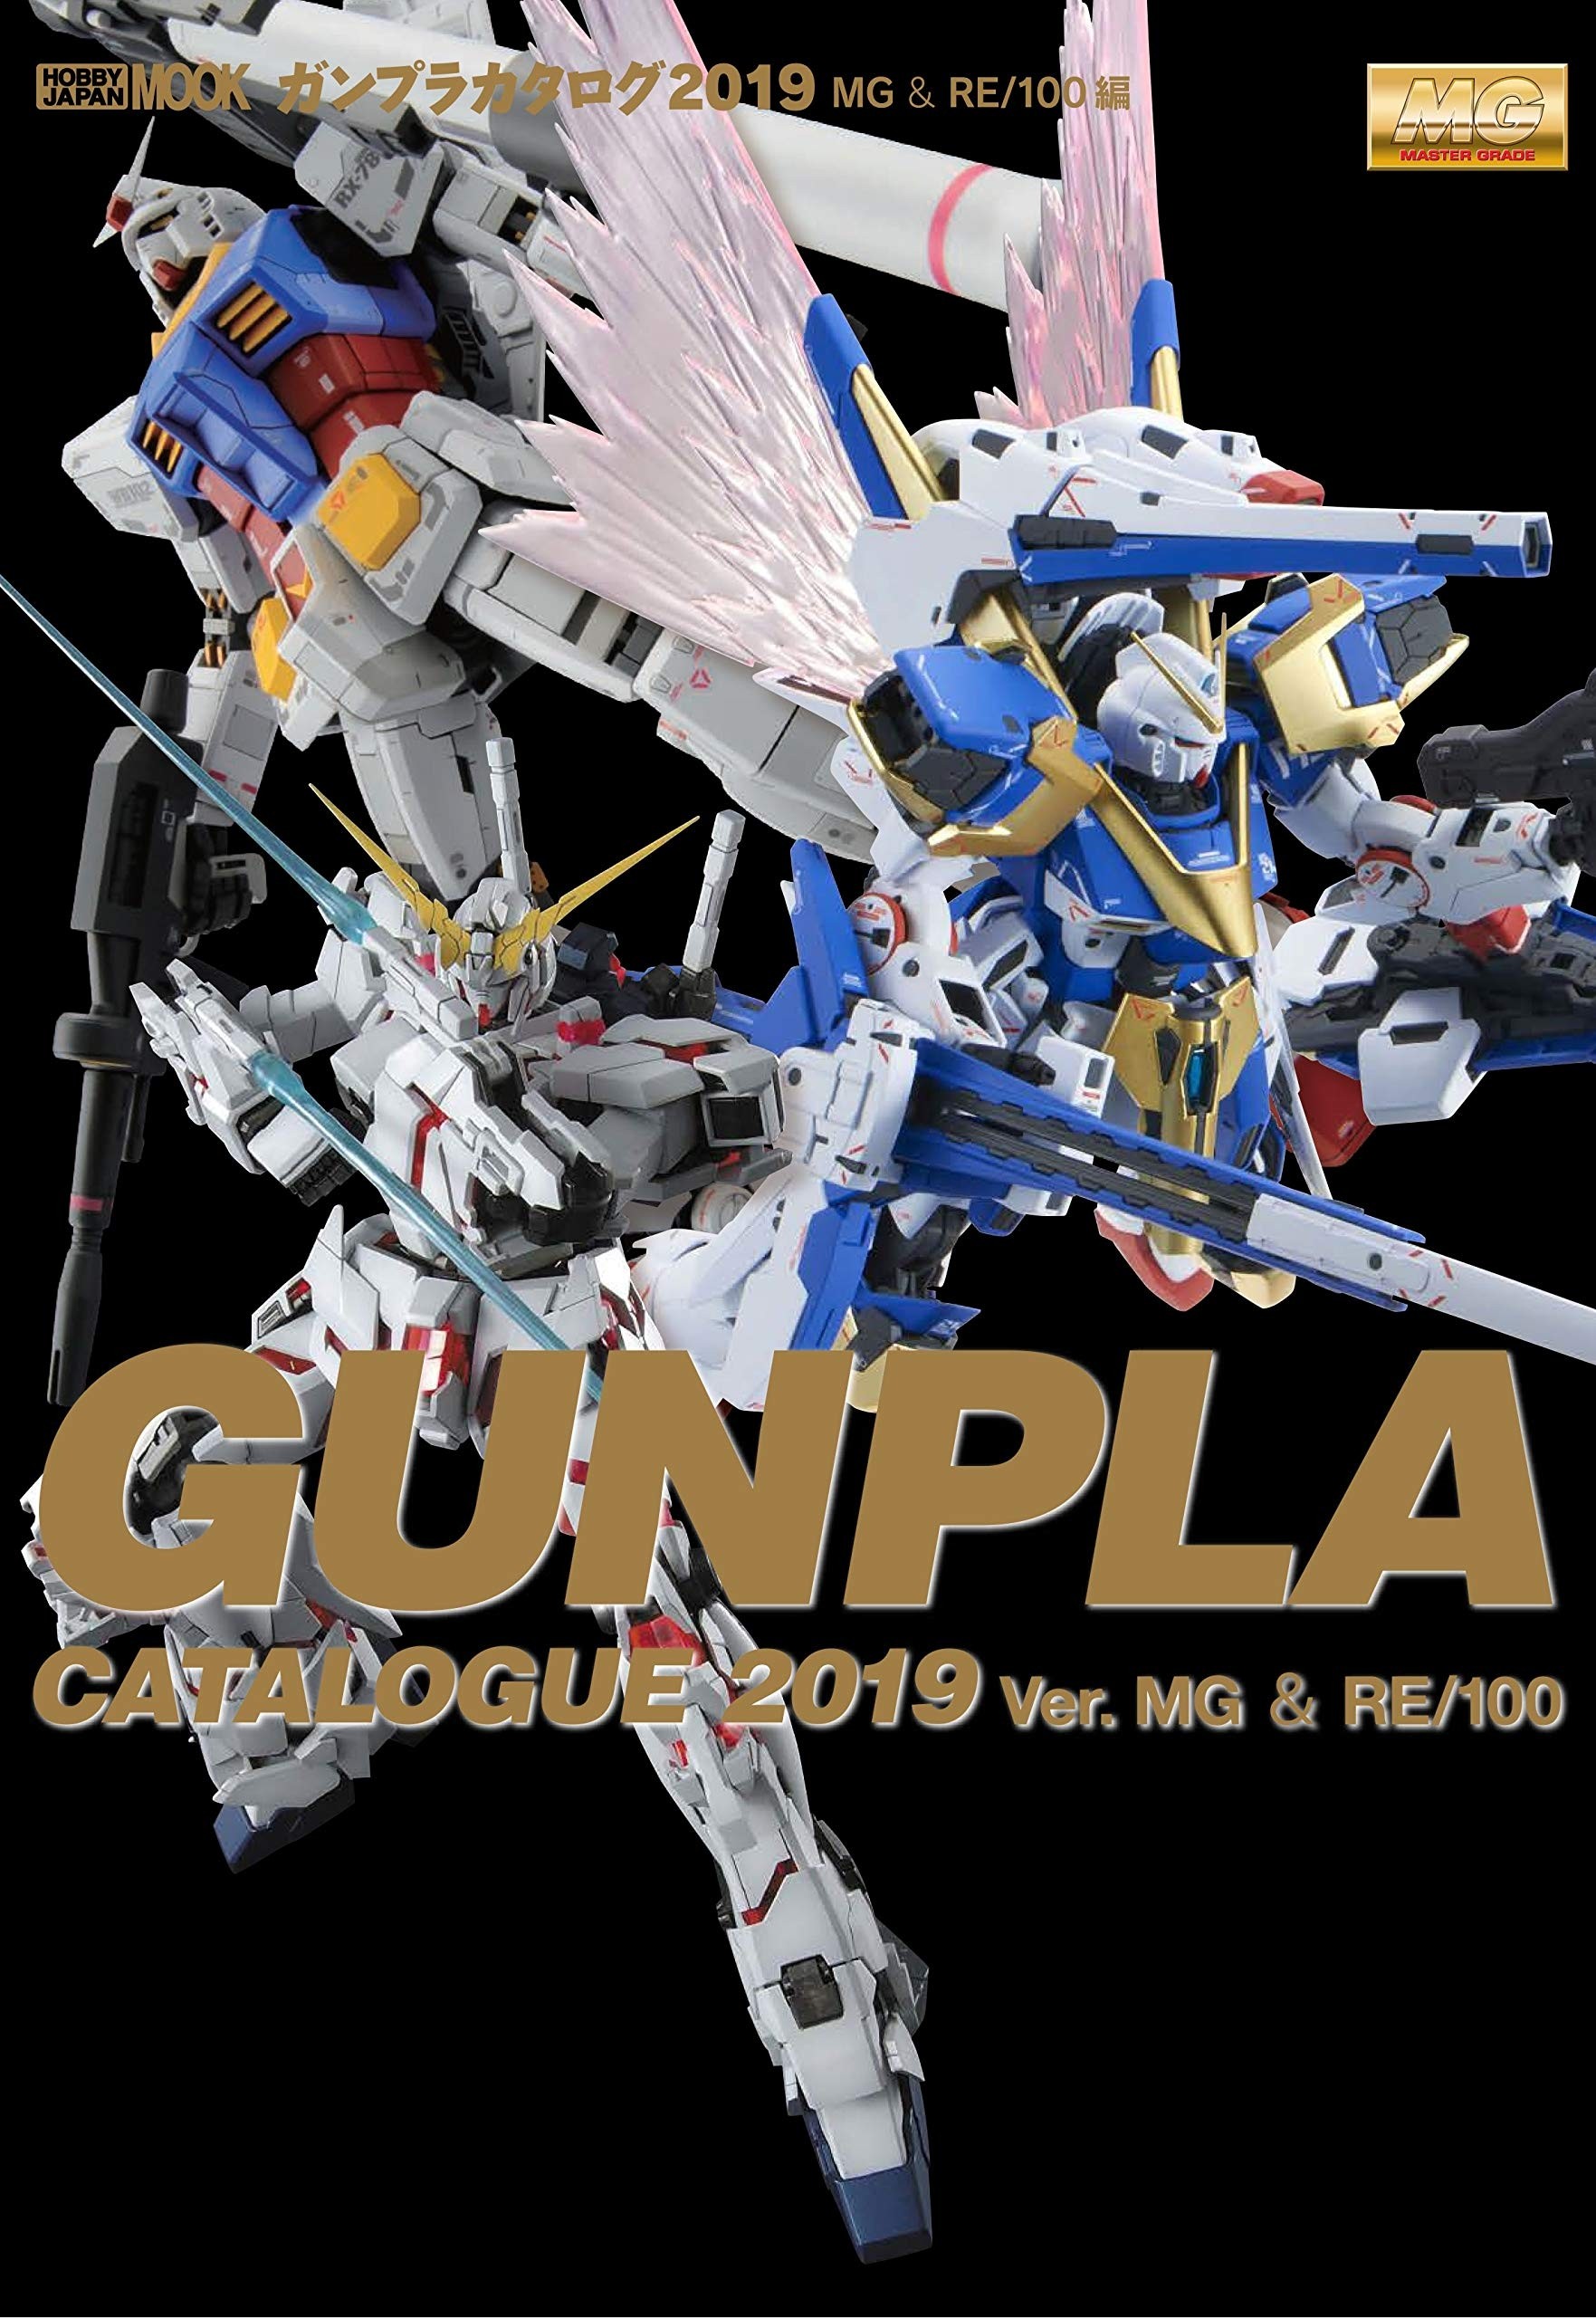 Gunpla Catalogue 2019 MG & RE/100 Ver.. - (Japanese Import)